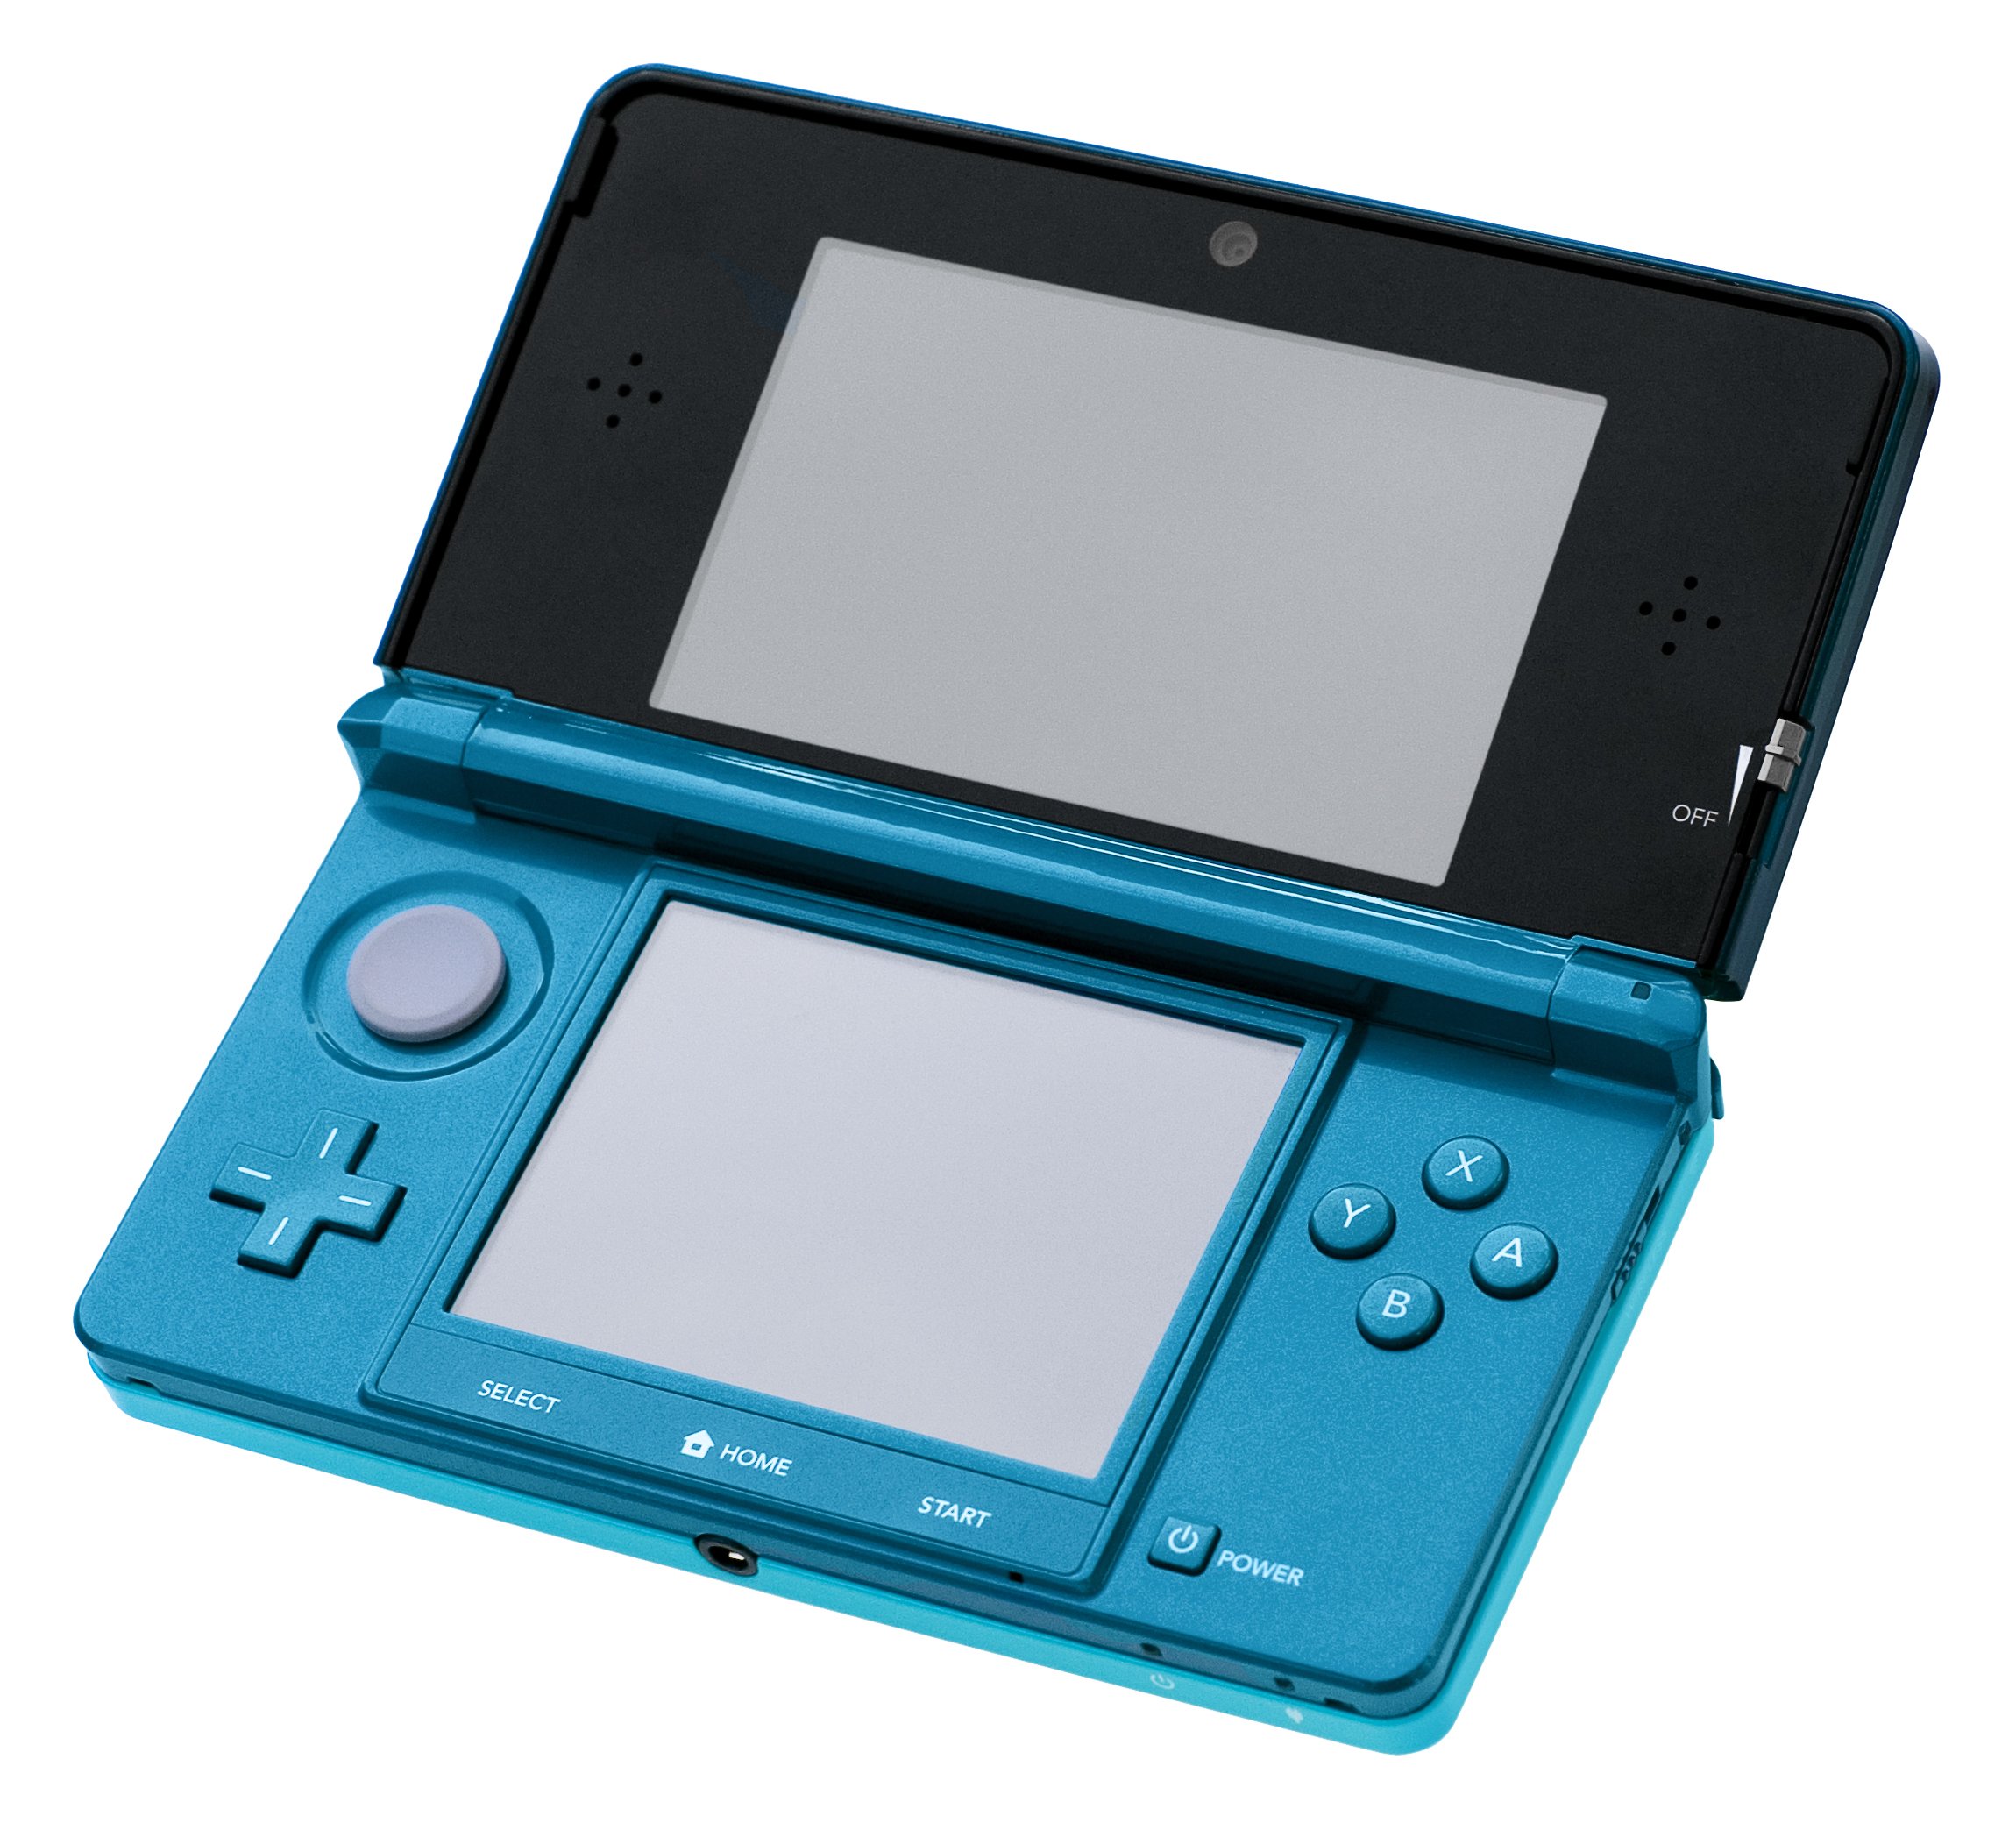 3DS XL Azul, Sem Caixa